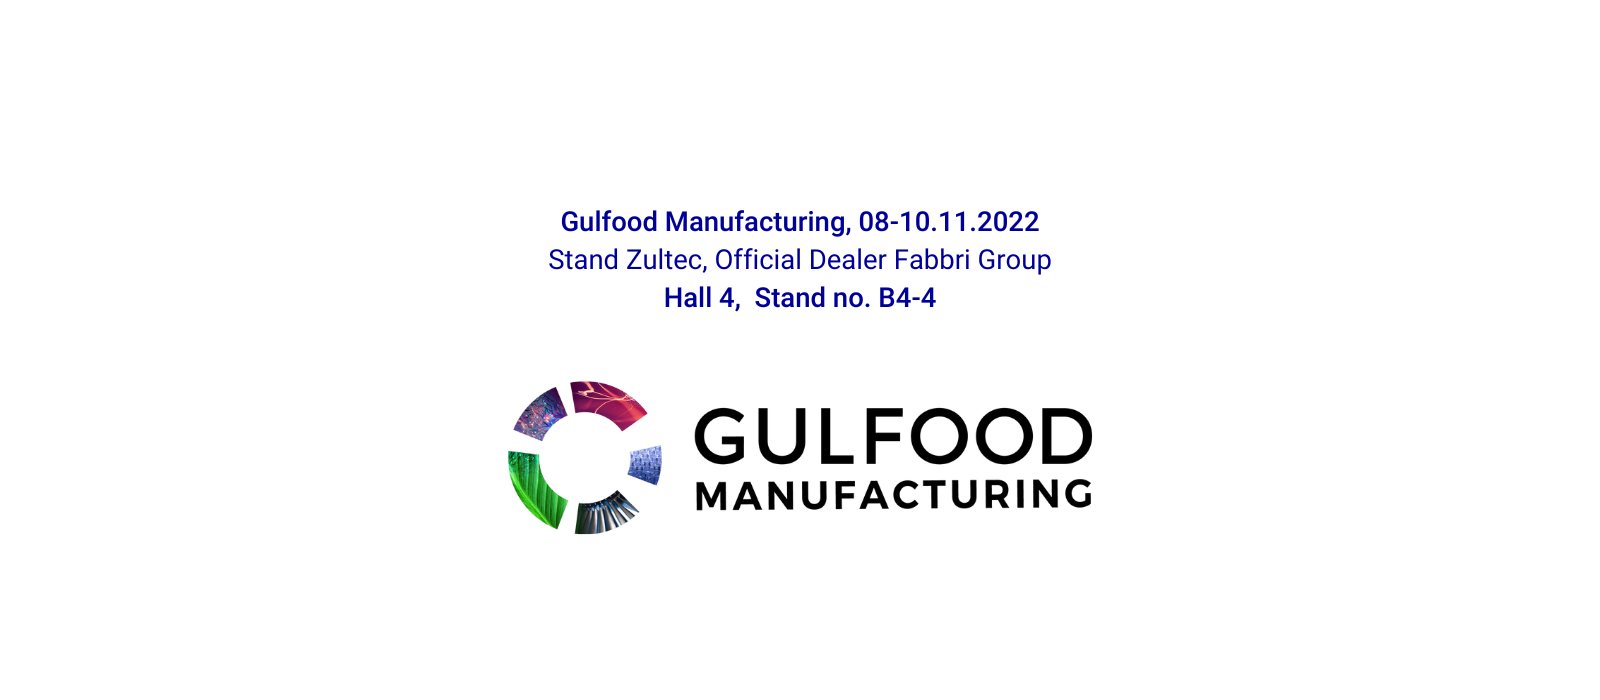 Fabbri Group at Gulfood Manufacturing 2022